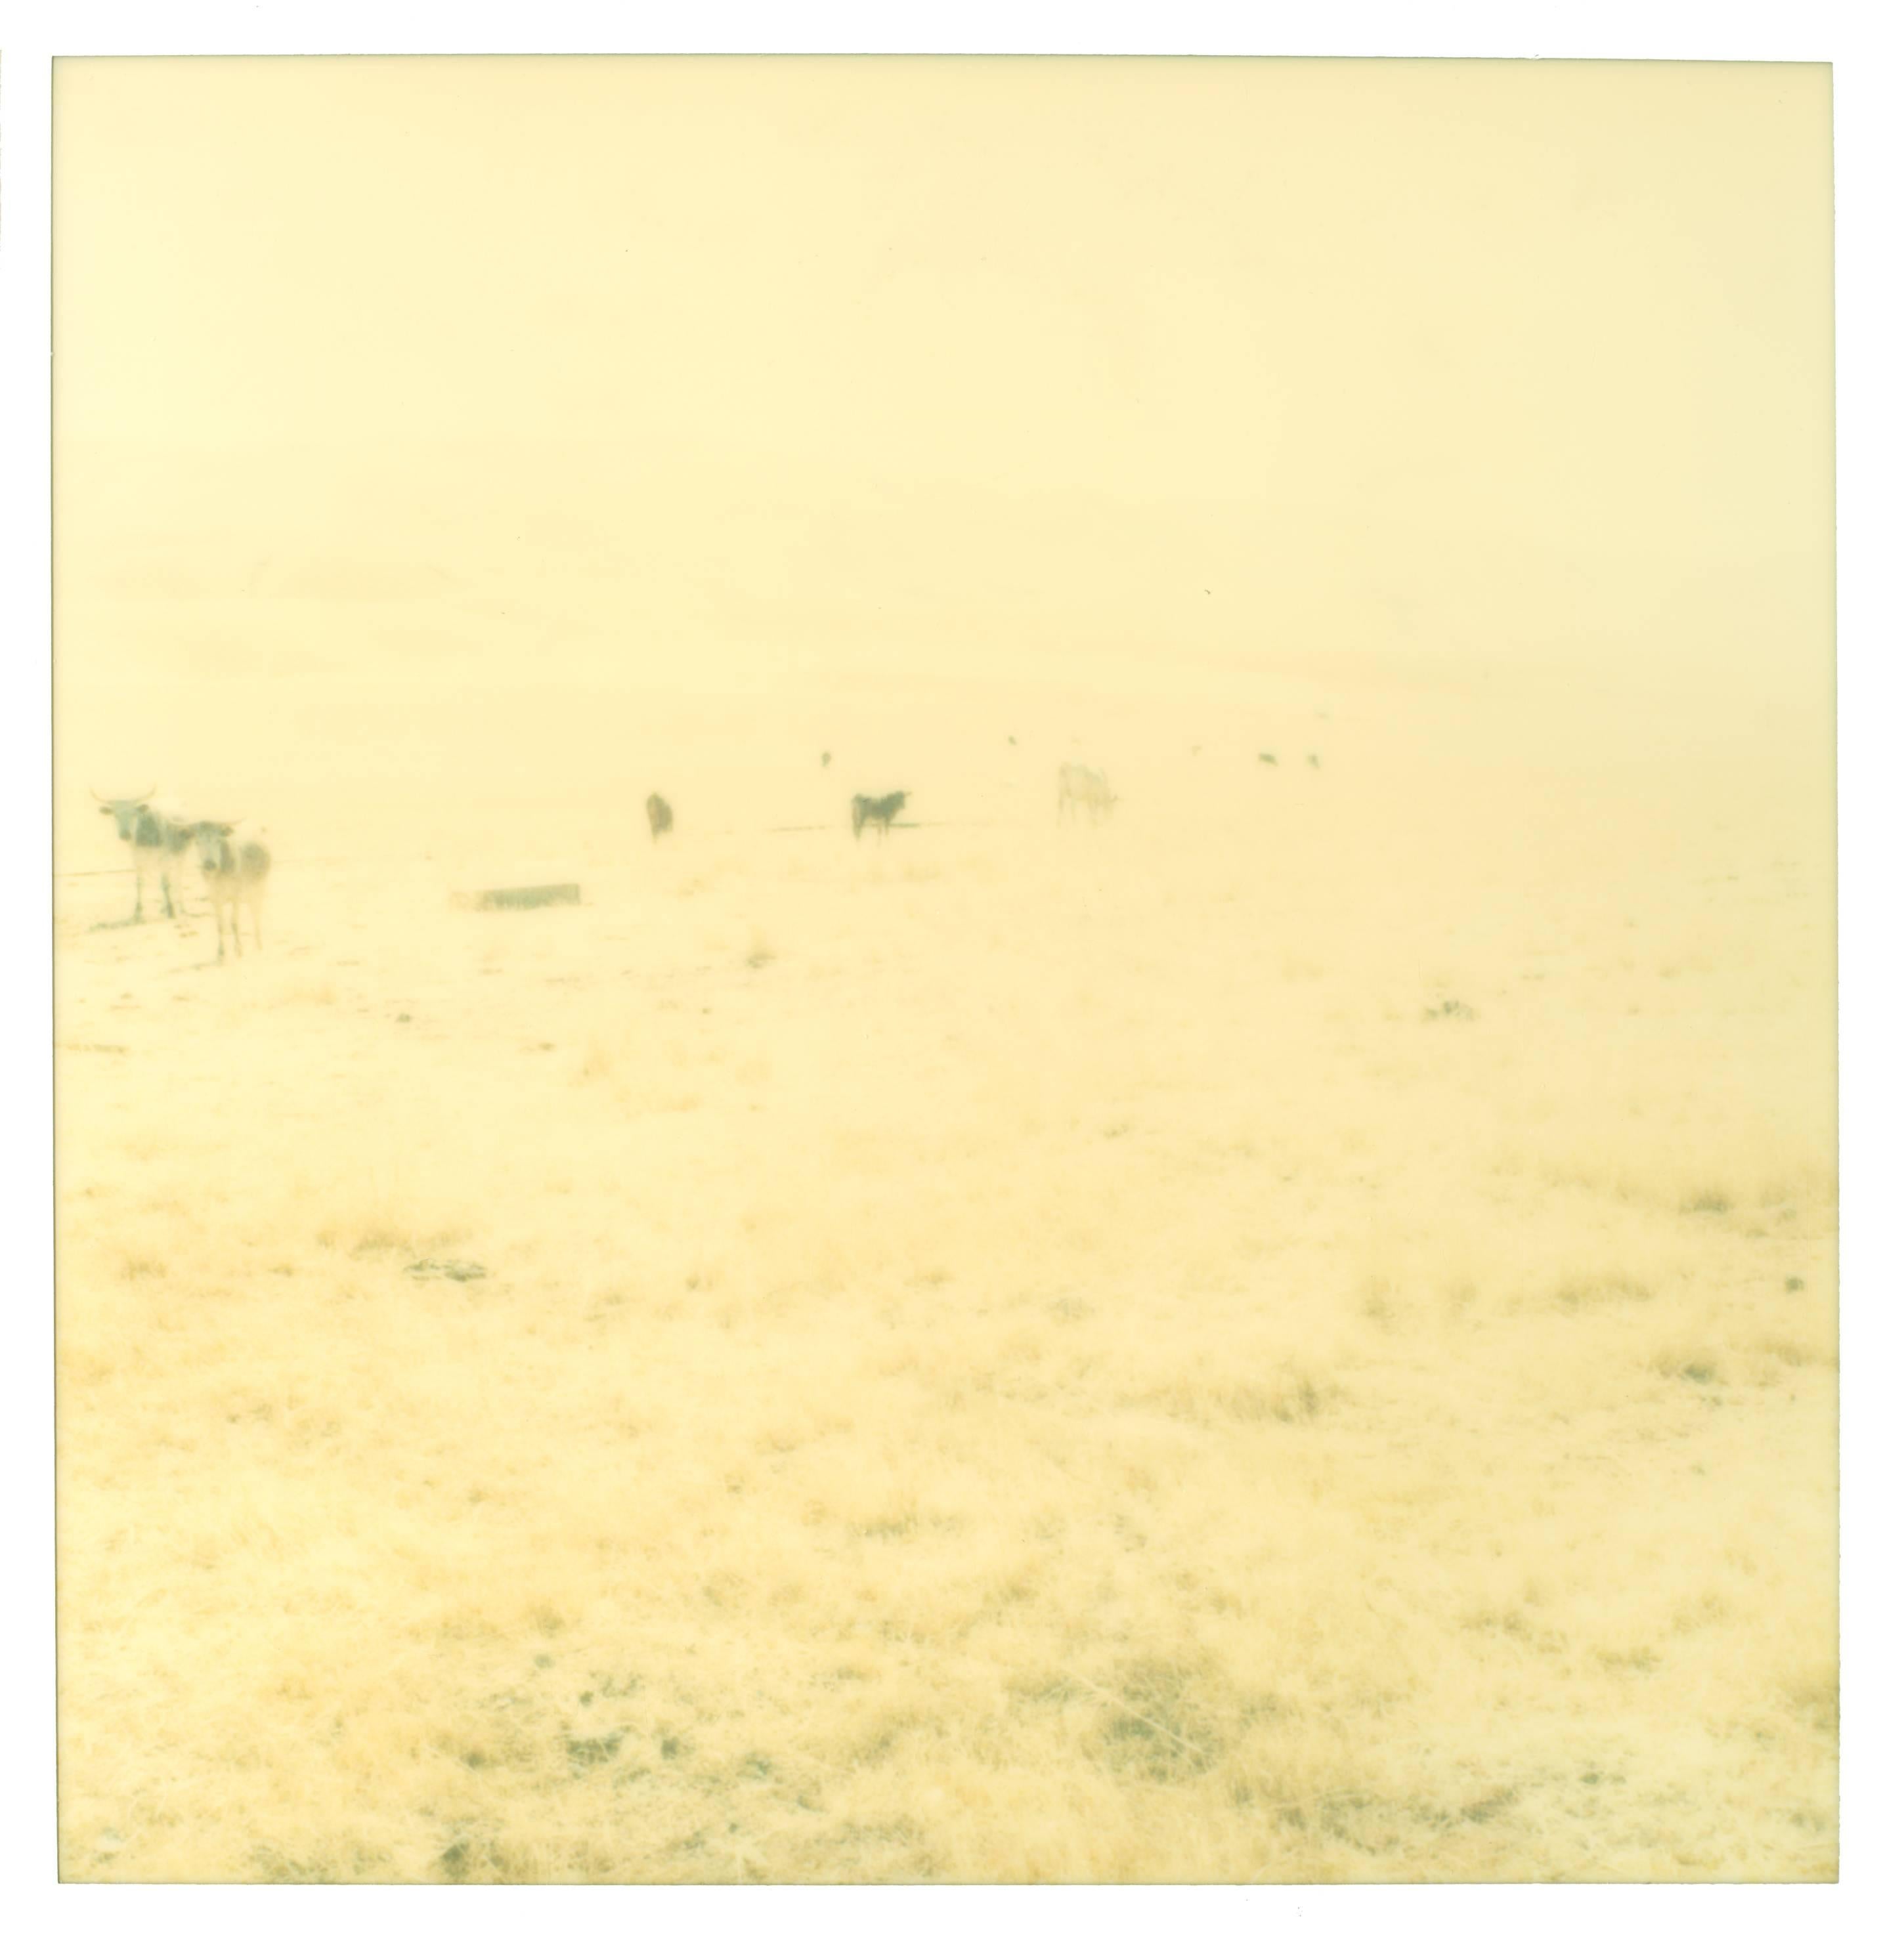 Untitled (Oilfields) Contemporary, 21st Century, Desert, Polaroid, Landscape